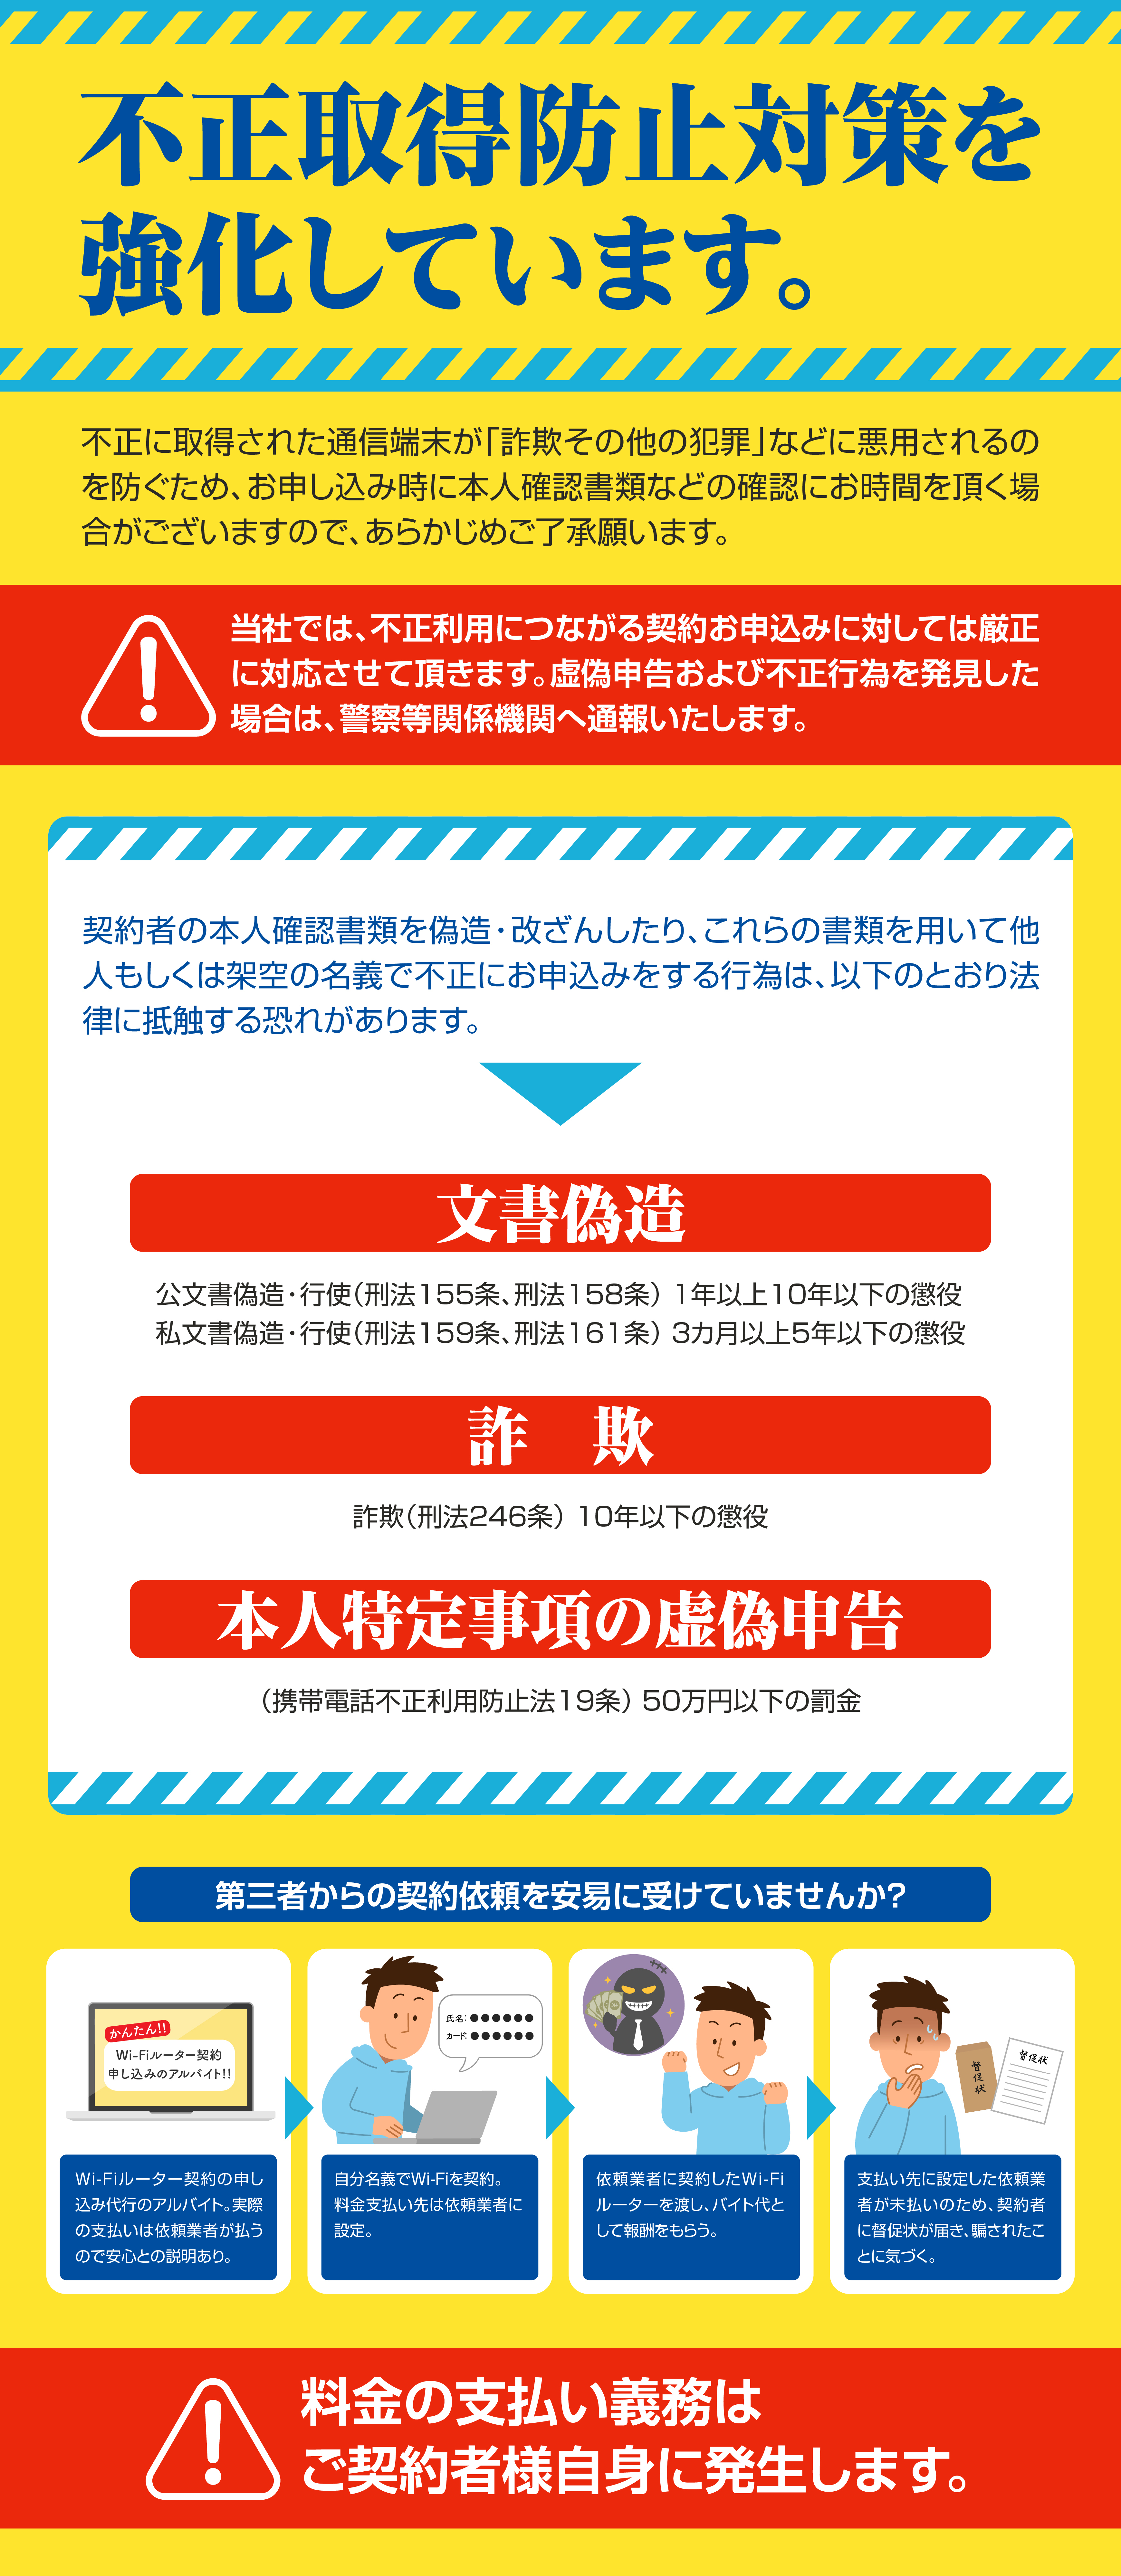 WiMAX+5G キャンペーン ワイマックス 新プラン au UQ　不正利用防止 注意喚起